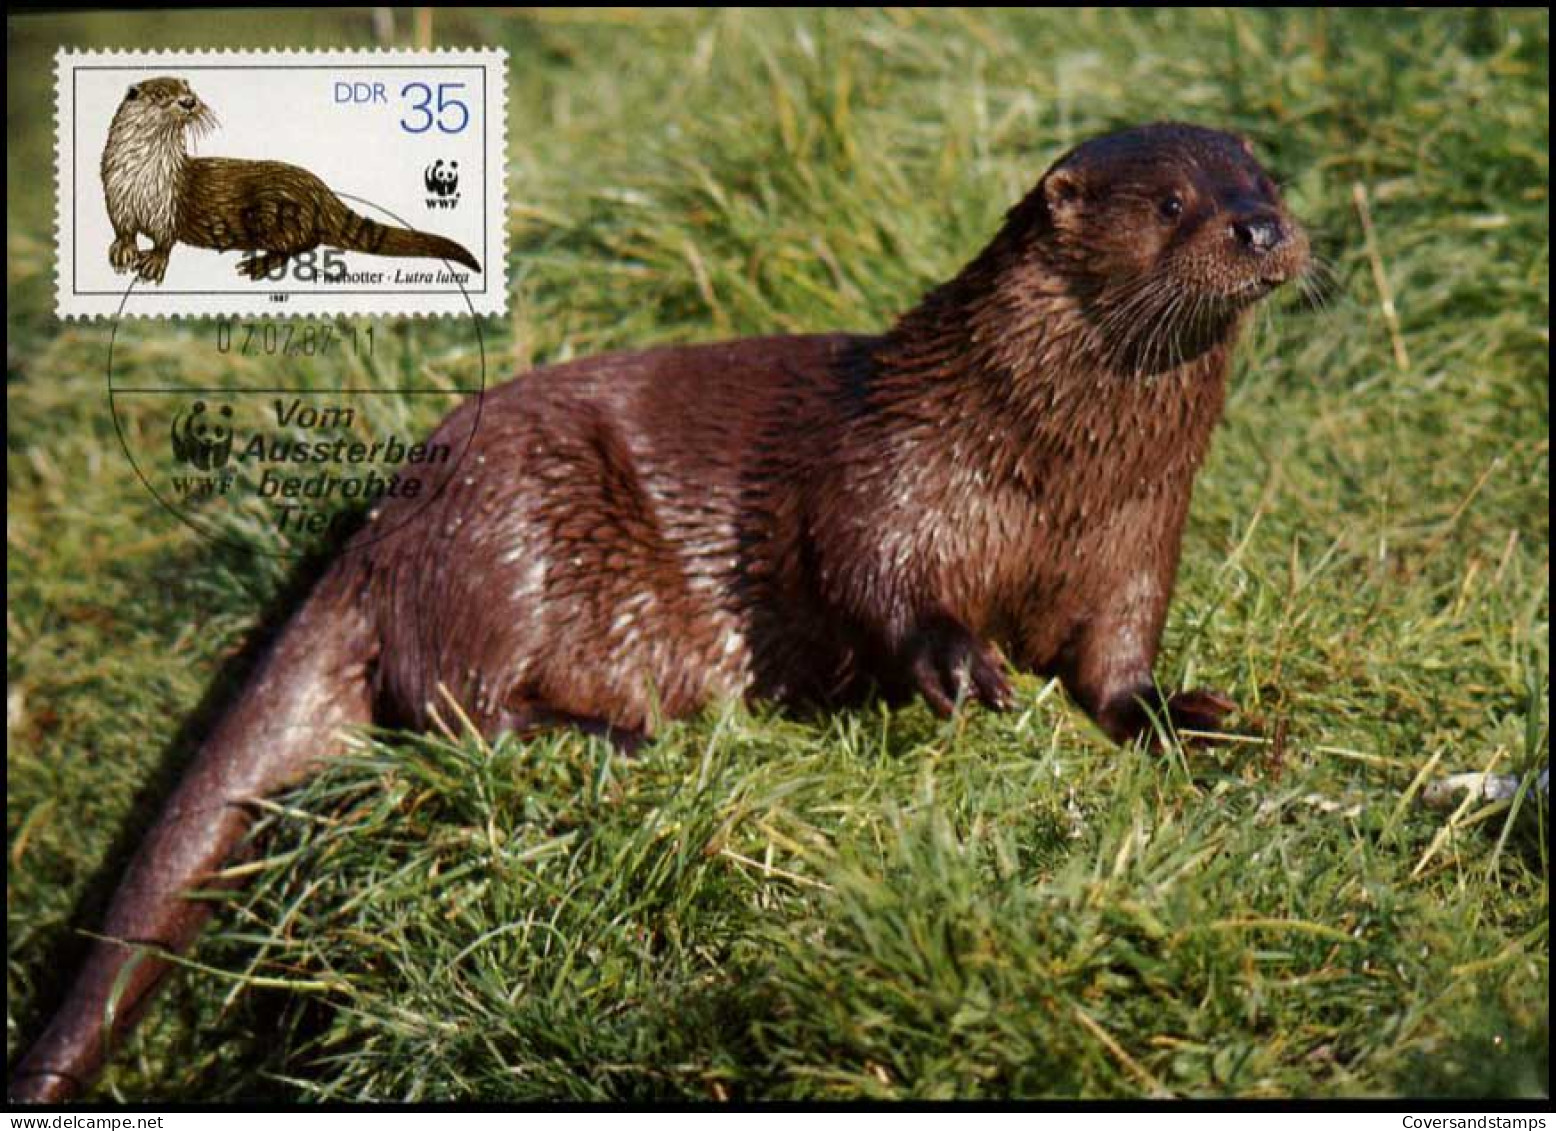  DDR - MK -  WWF : European Otter - Cartoline Maximum